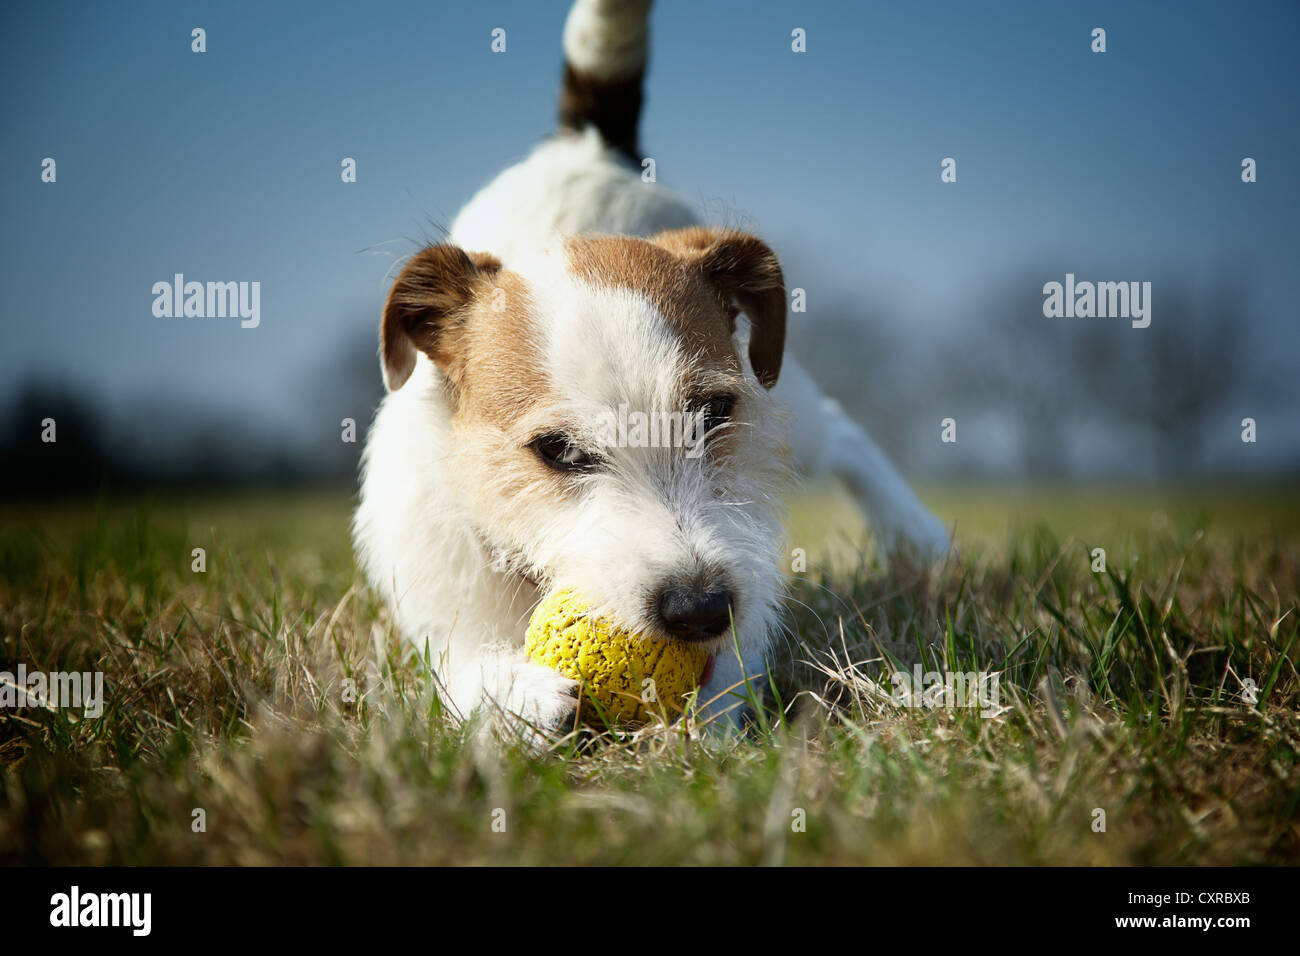 Parson Russell Terrier, cachorro de 7 meses, jugando con una pelota de goma amarilla sobre un césped Foto de stock